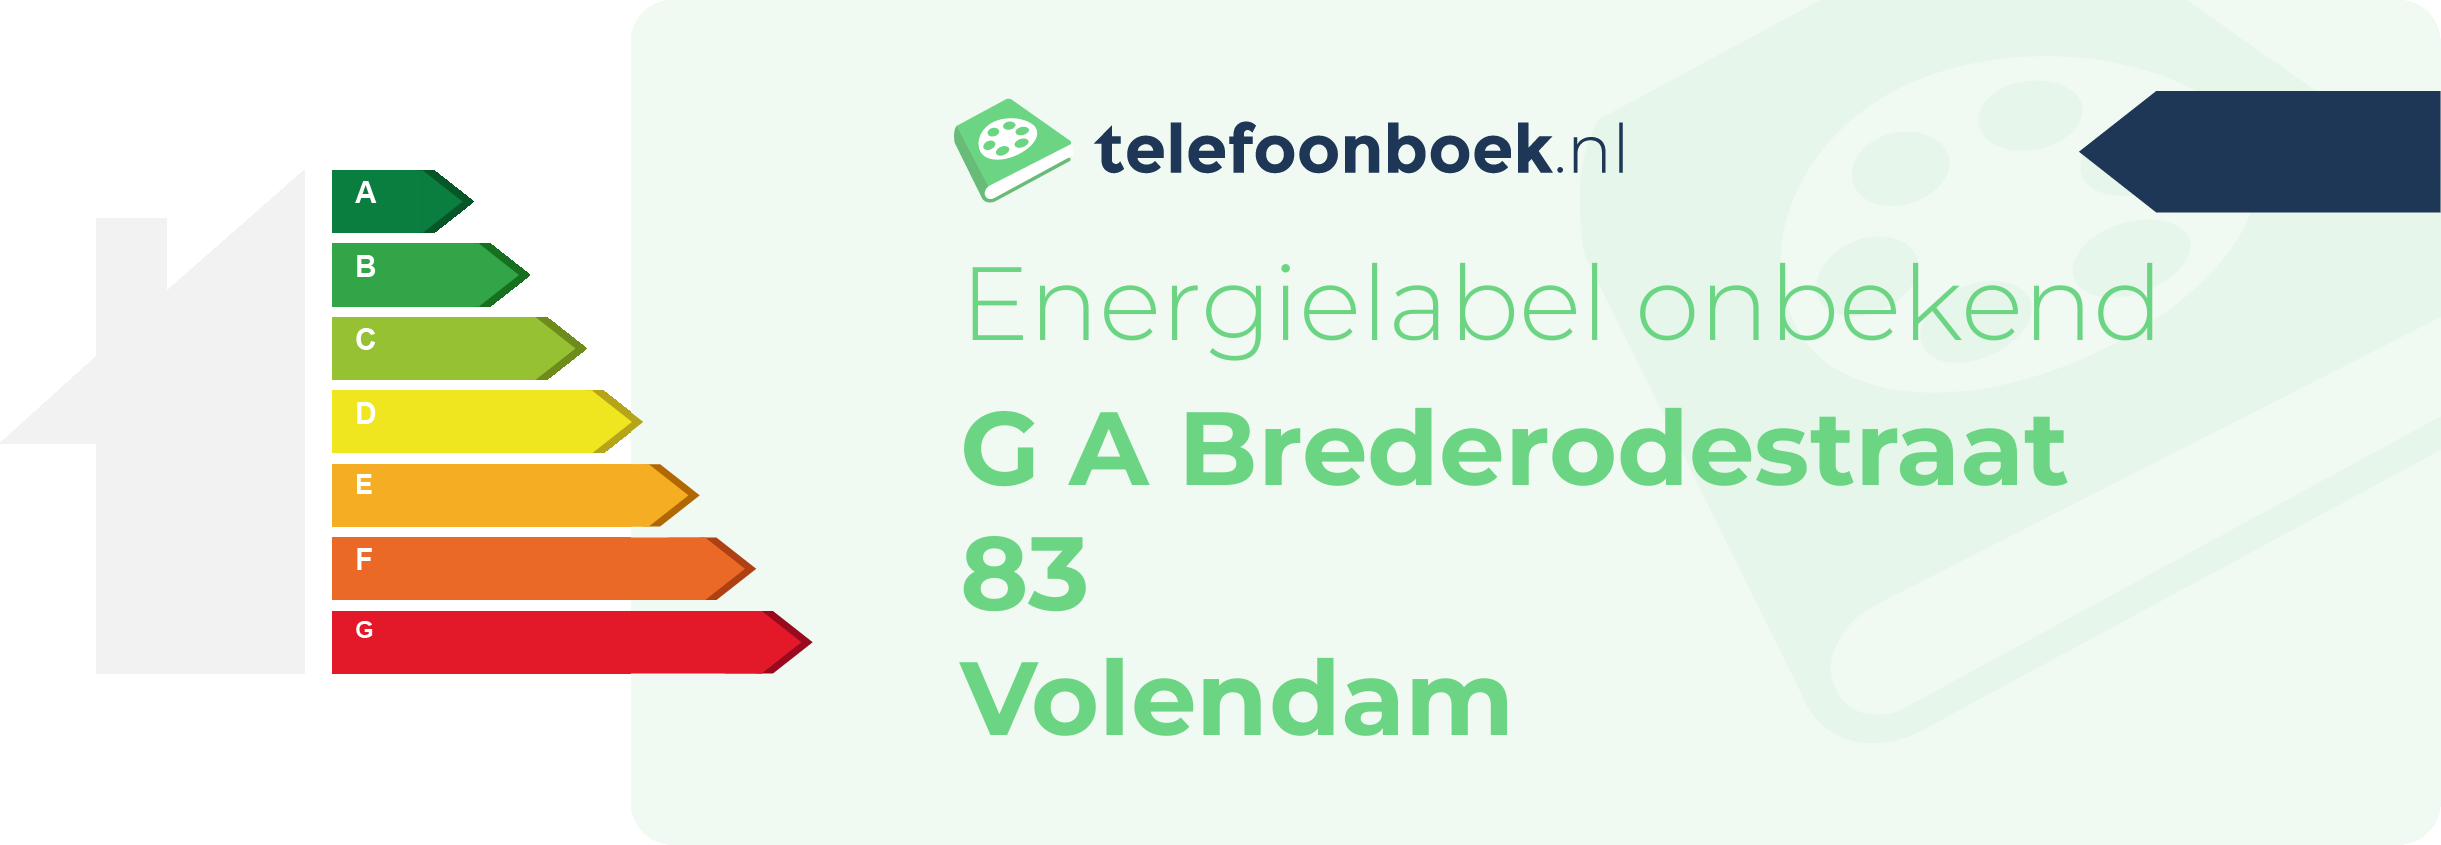 Energielabel G A Brederodestraat 83 Volendam